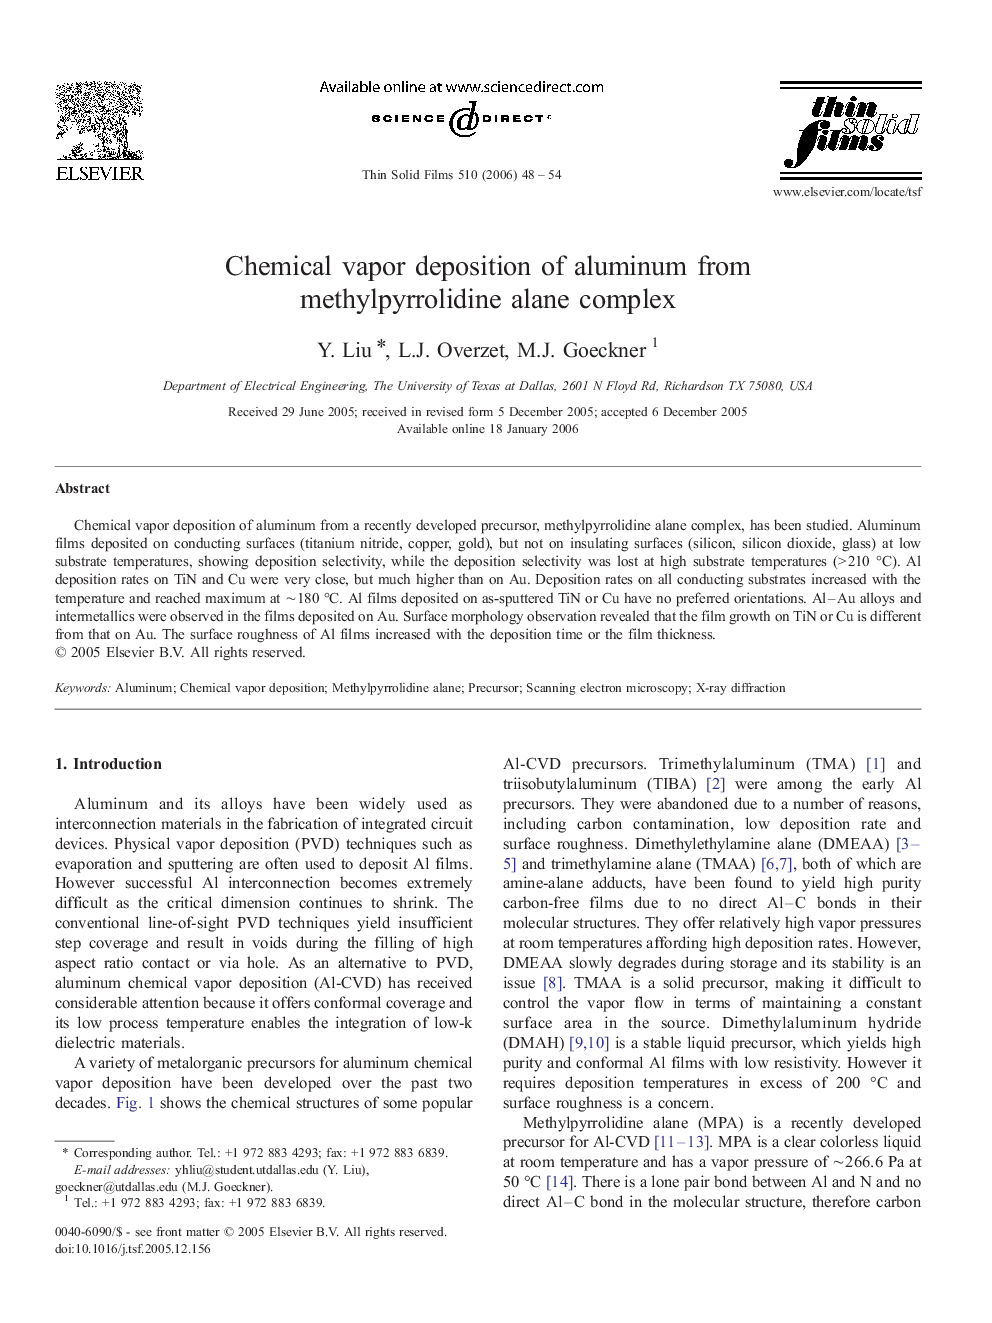 Chemical vapor deposition of aluminum from methylpyrrolidine alane complex